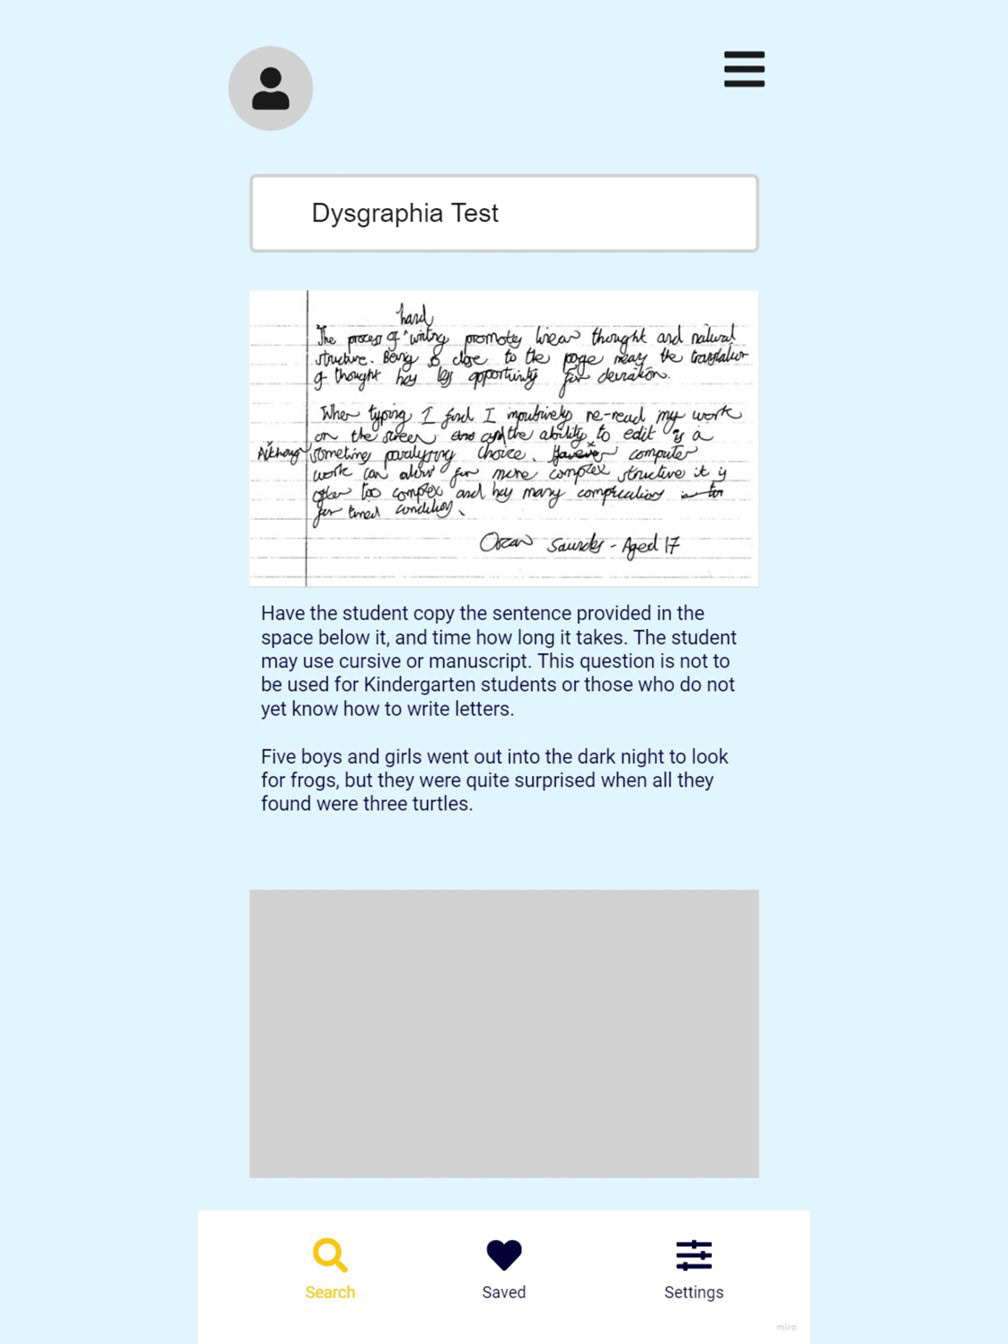 app design application awareness dysgraphia dyslexia Education handwriting handwritten industrial design  UI/UX